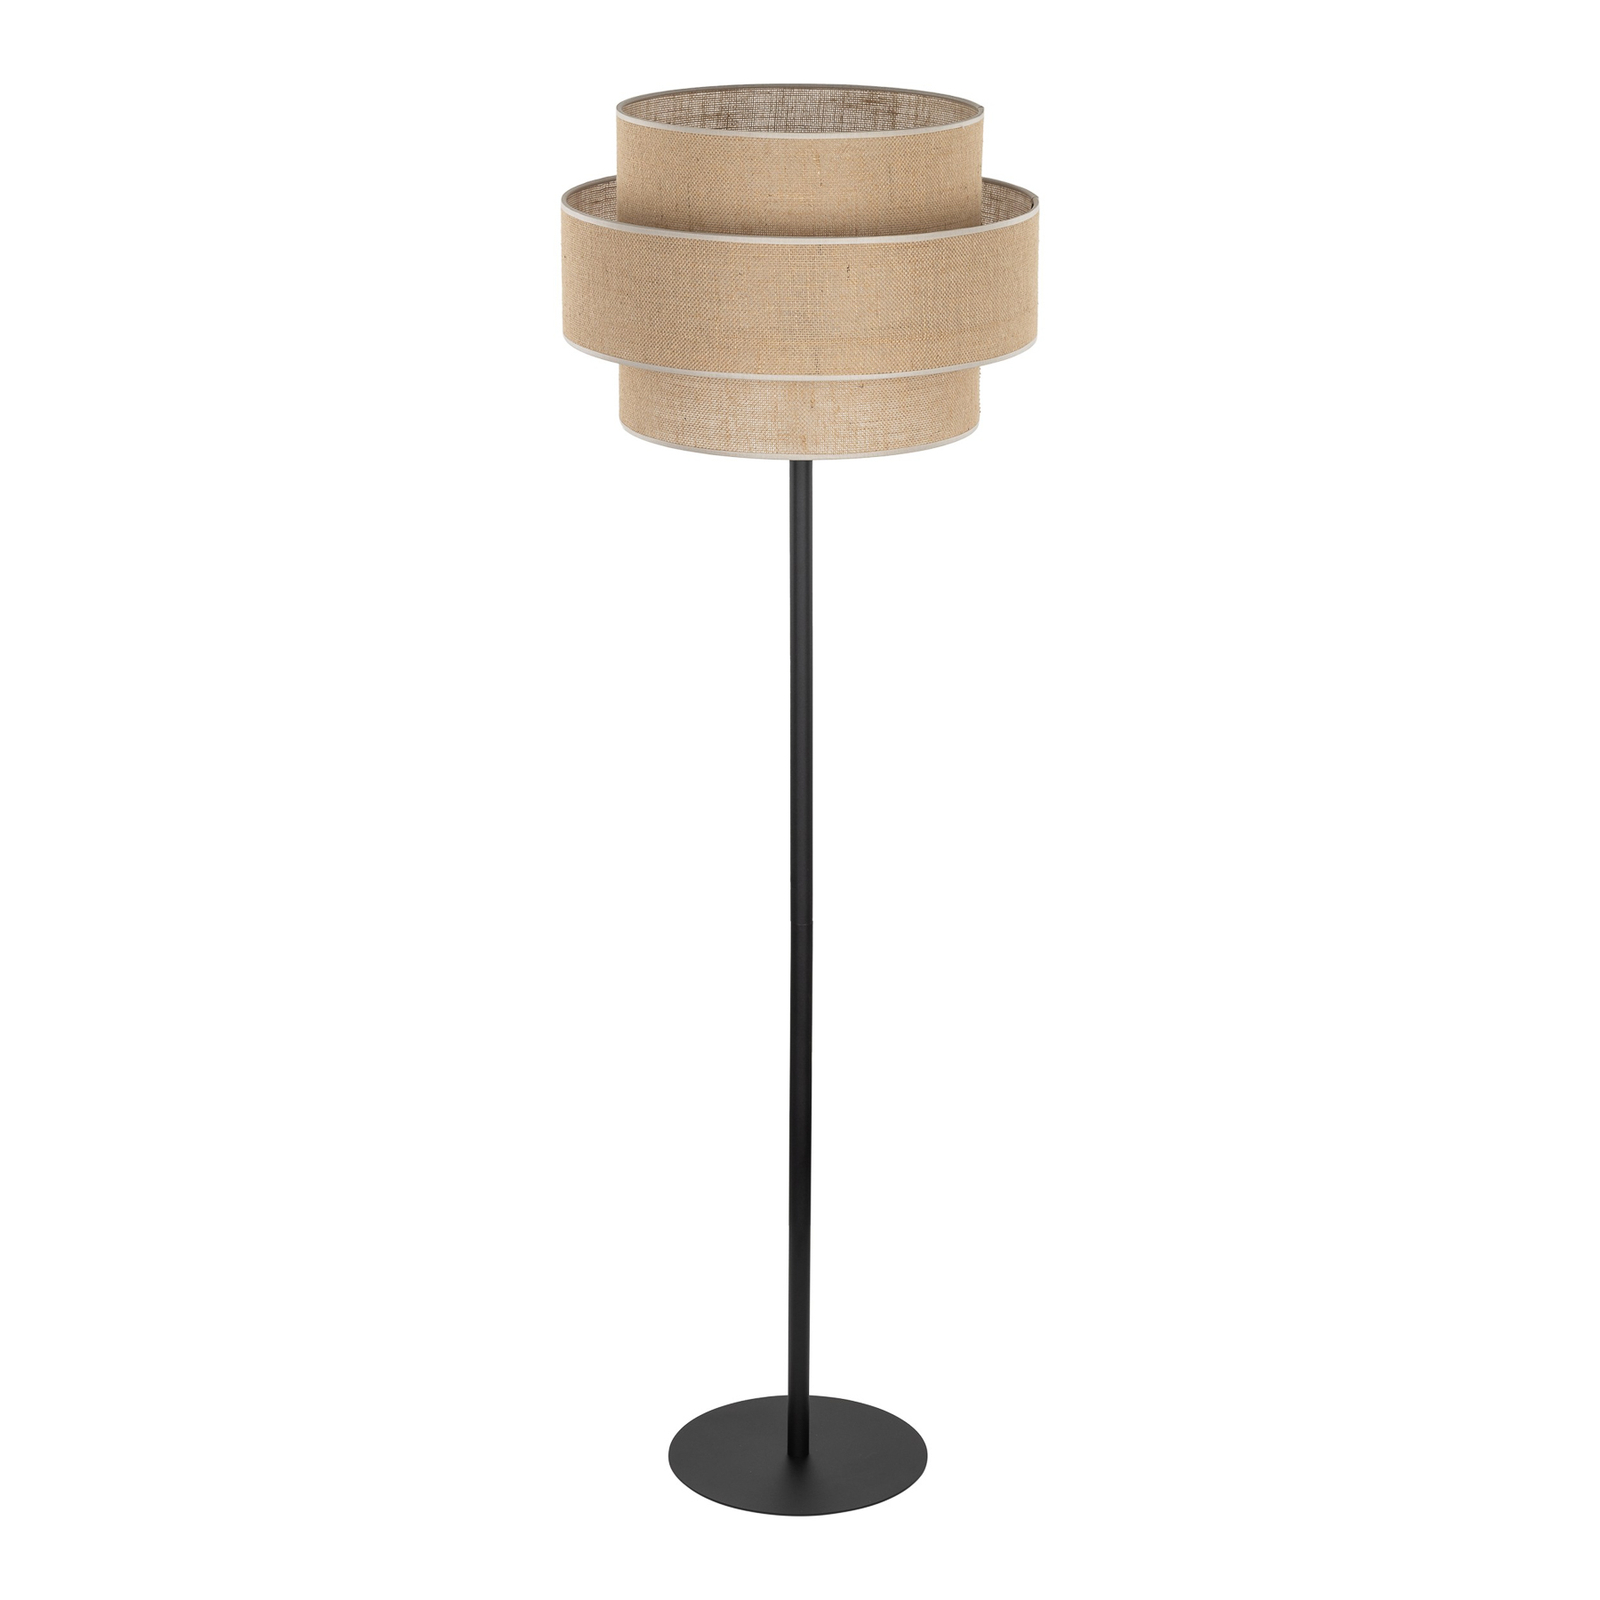 Calisto floor lamp, jute, cylinder, natural brown, height 155 cm